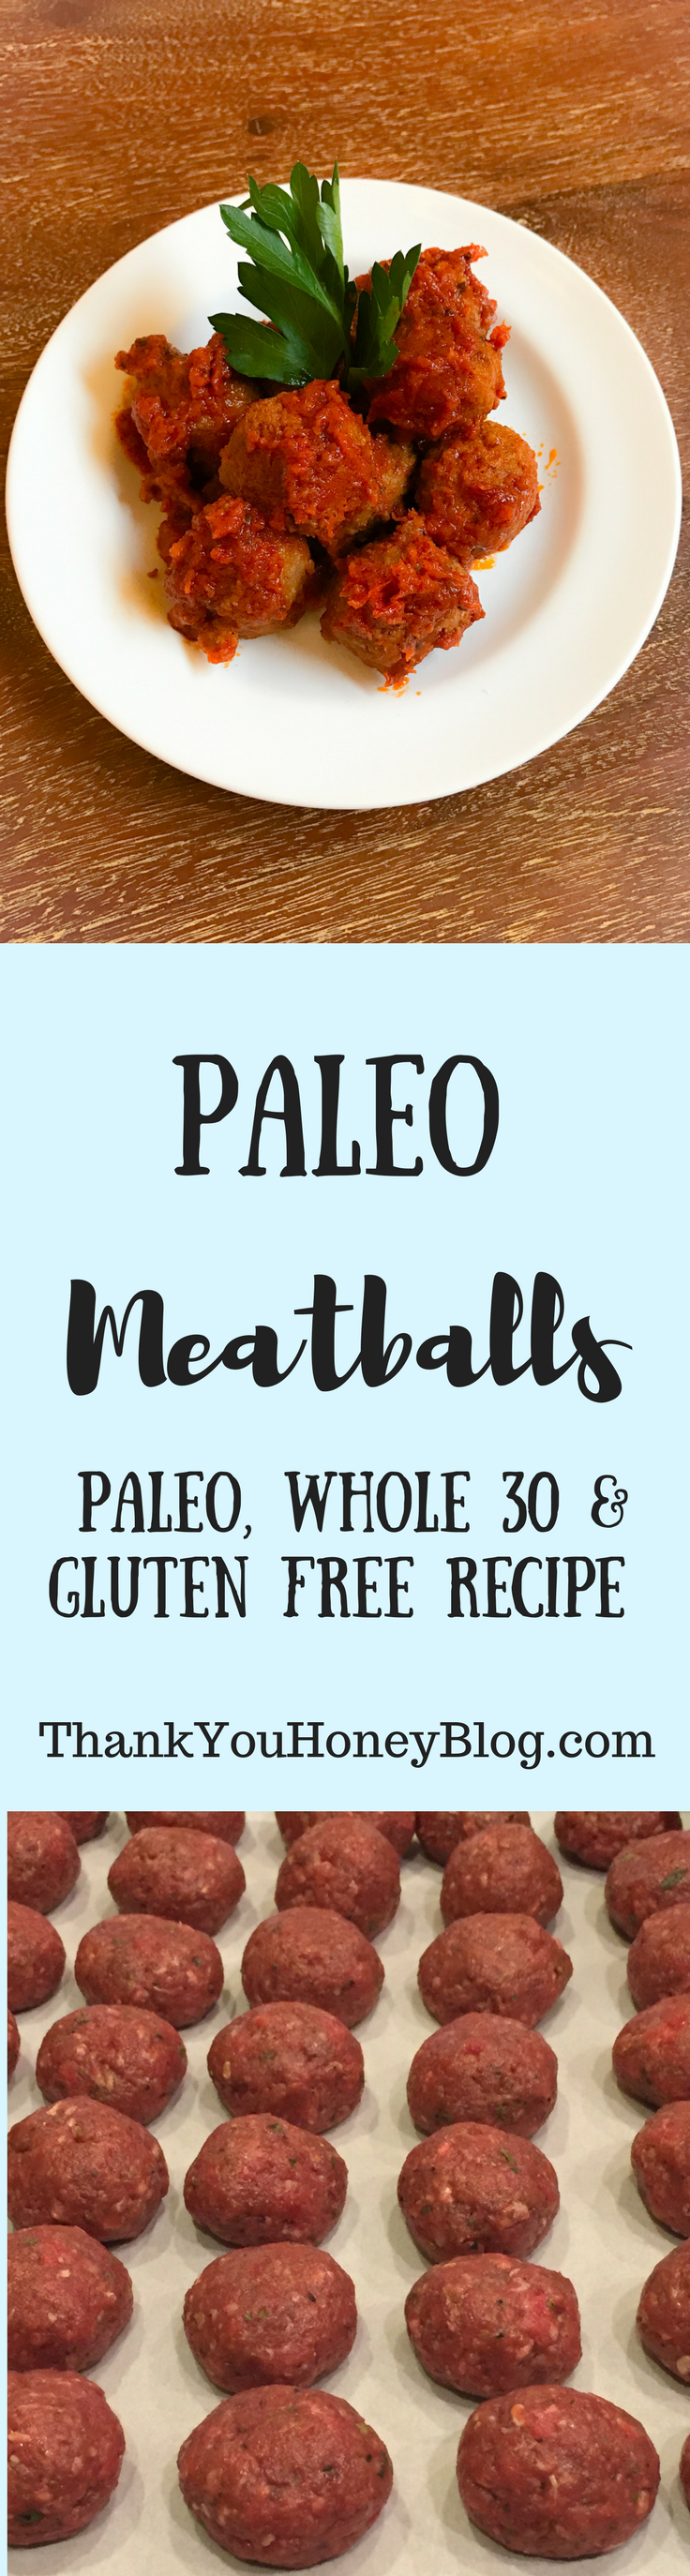 Paleo Meatballs, Paleo, Whole 30, and Gluten Free Recipe